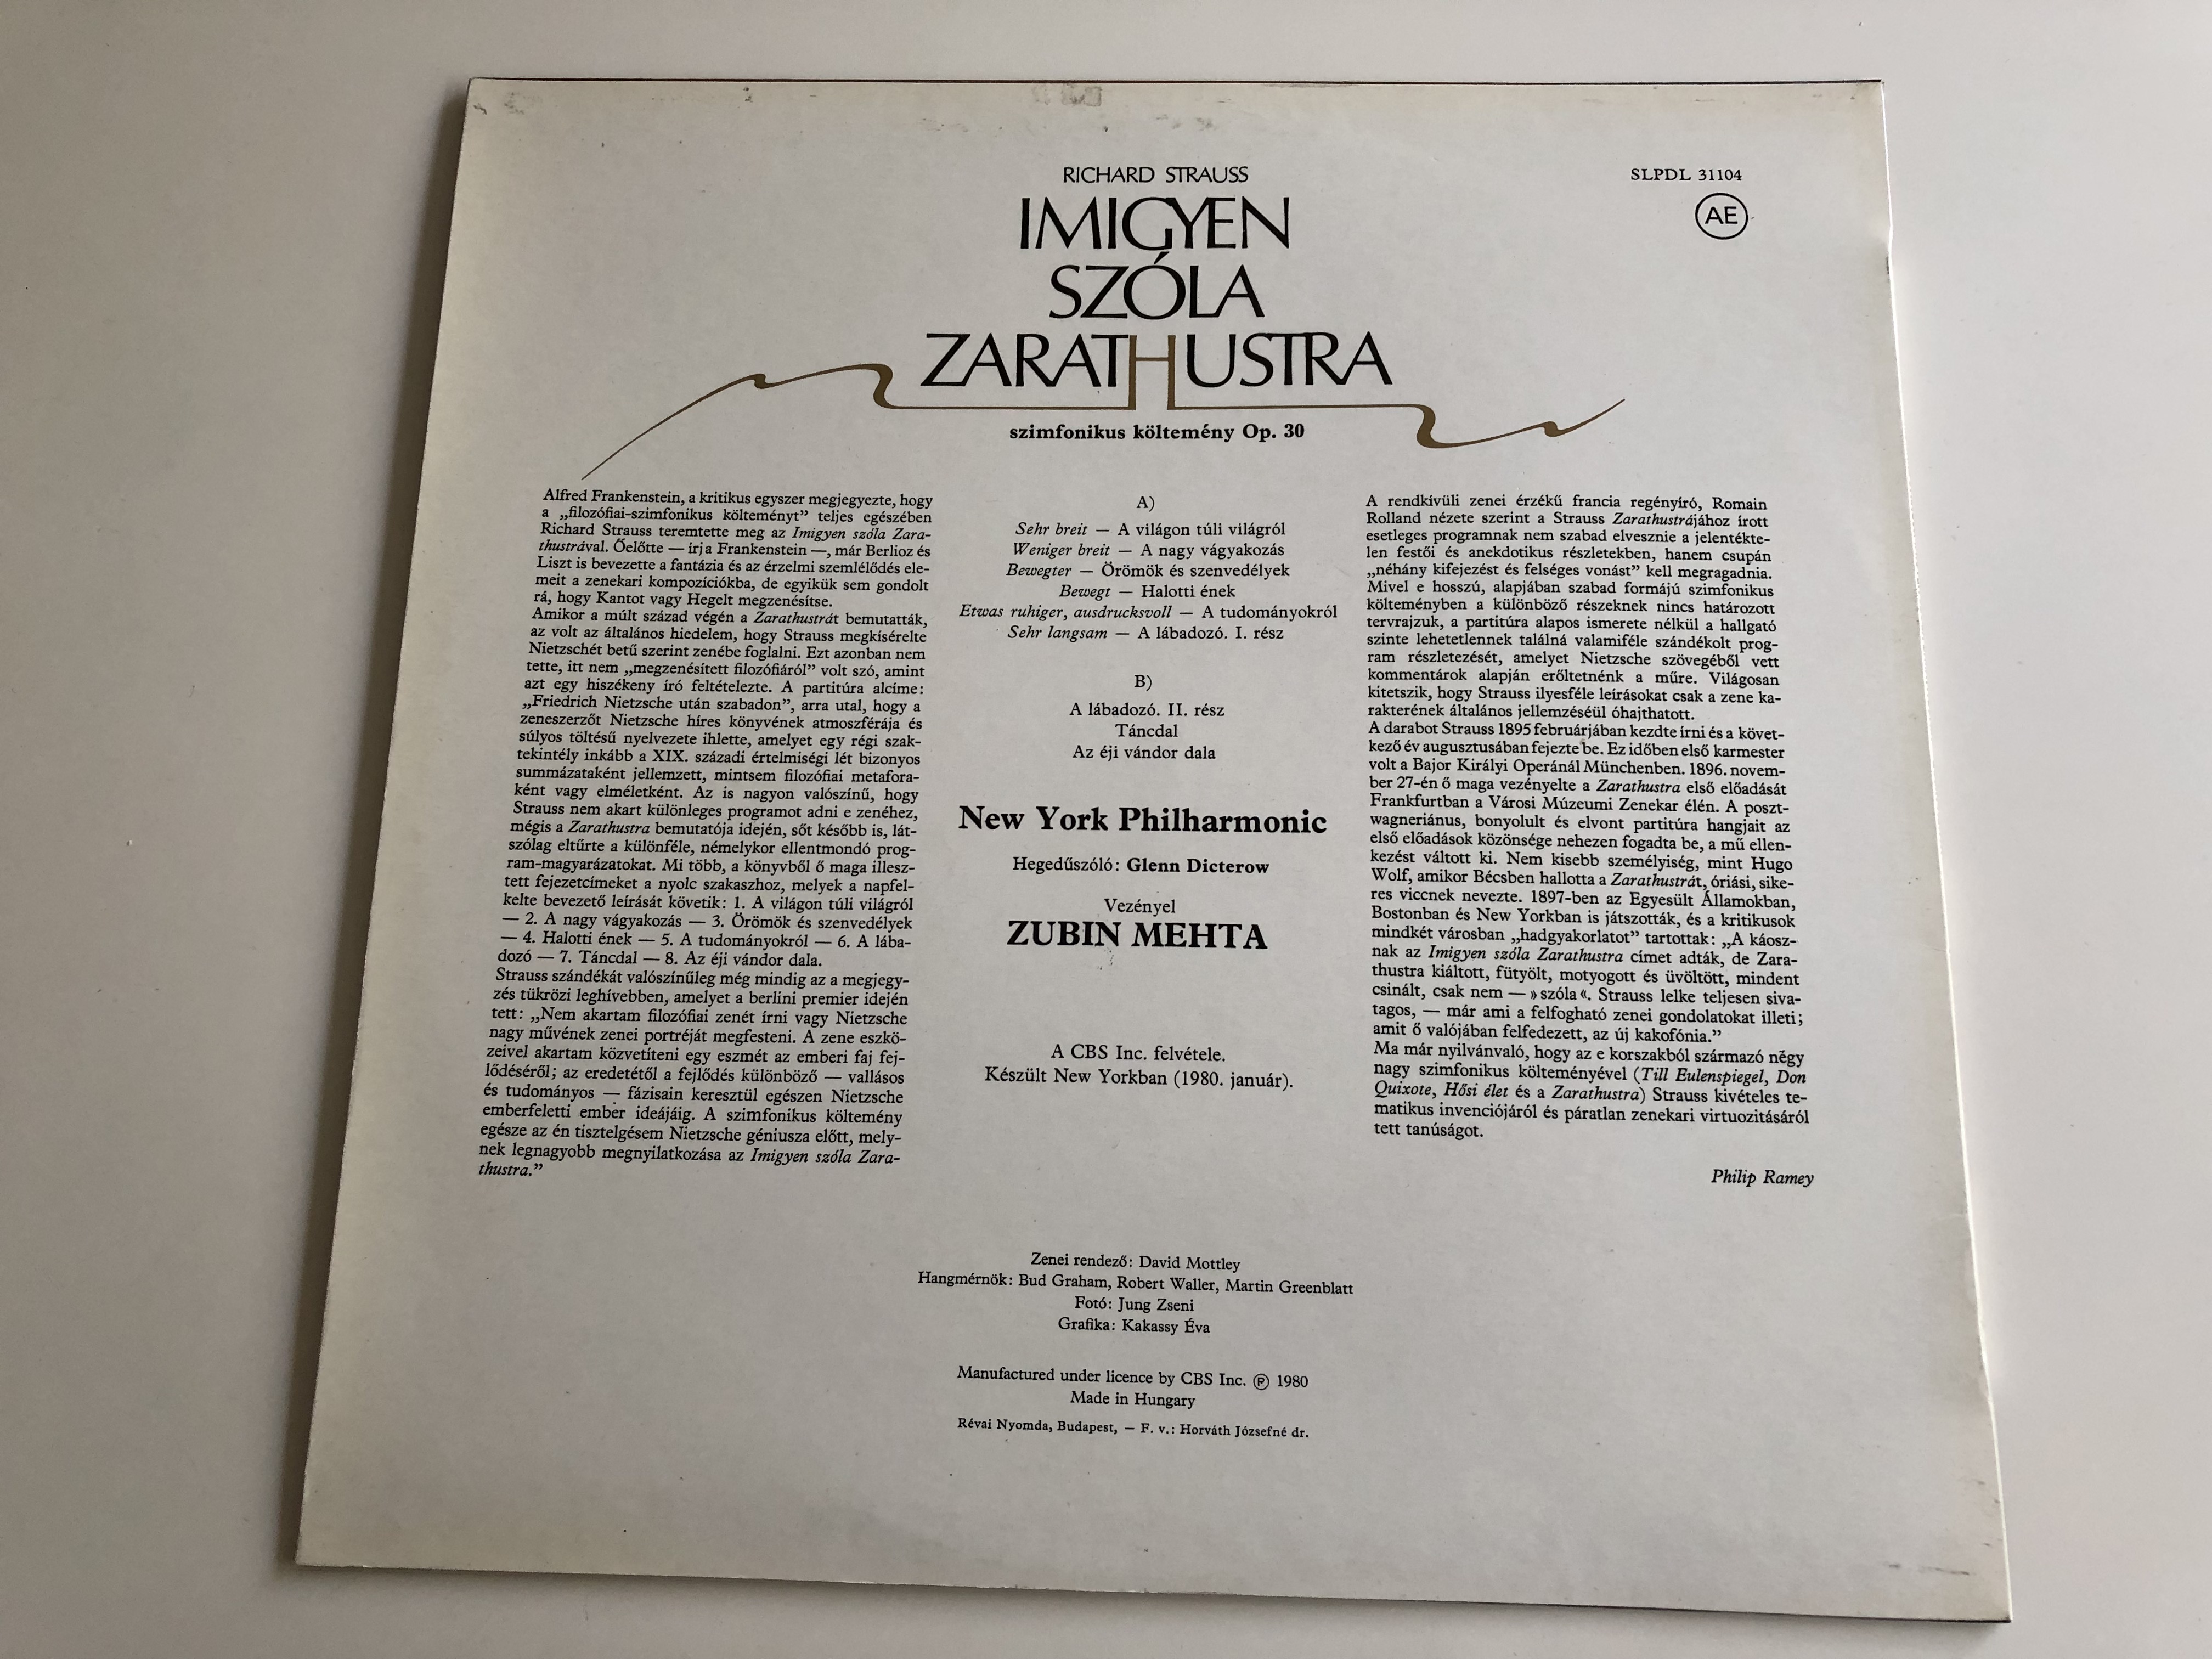 richard-strauss-imigyen-sz-la-zarathustra-conducted-zubin-mehta-new-york-philharmonic-hungaroton-lp-stereo-slpd-31104-2-.jpg